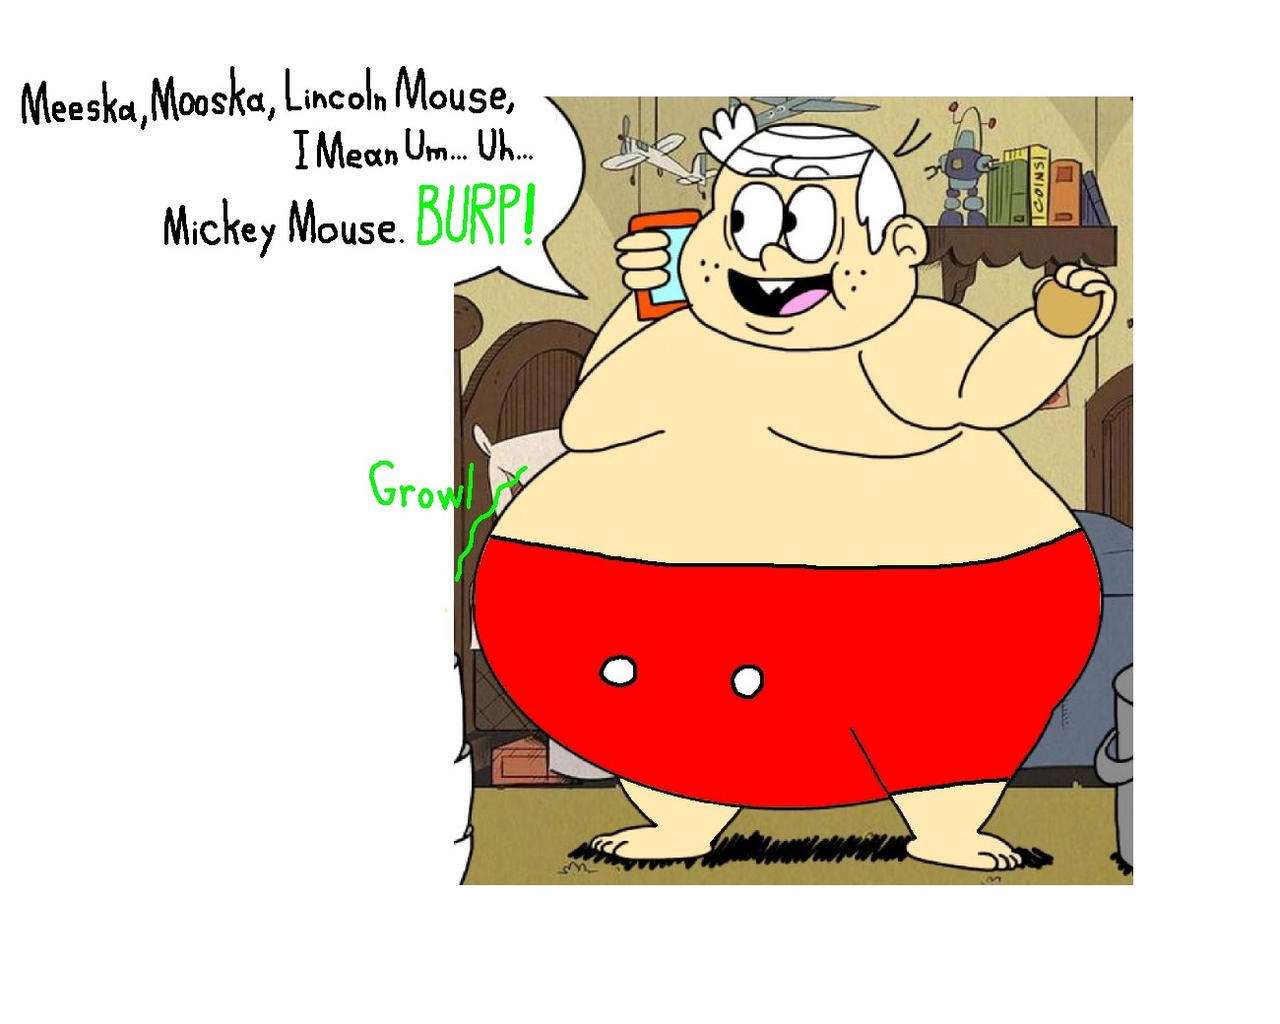 Fat Lincoln alto como Mickey Mouse puzzle online a partir de fotografia